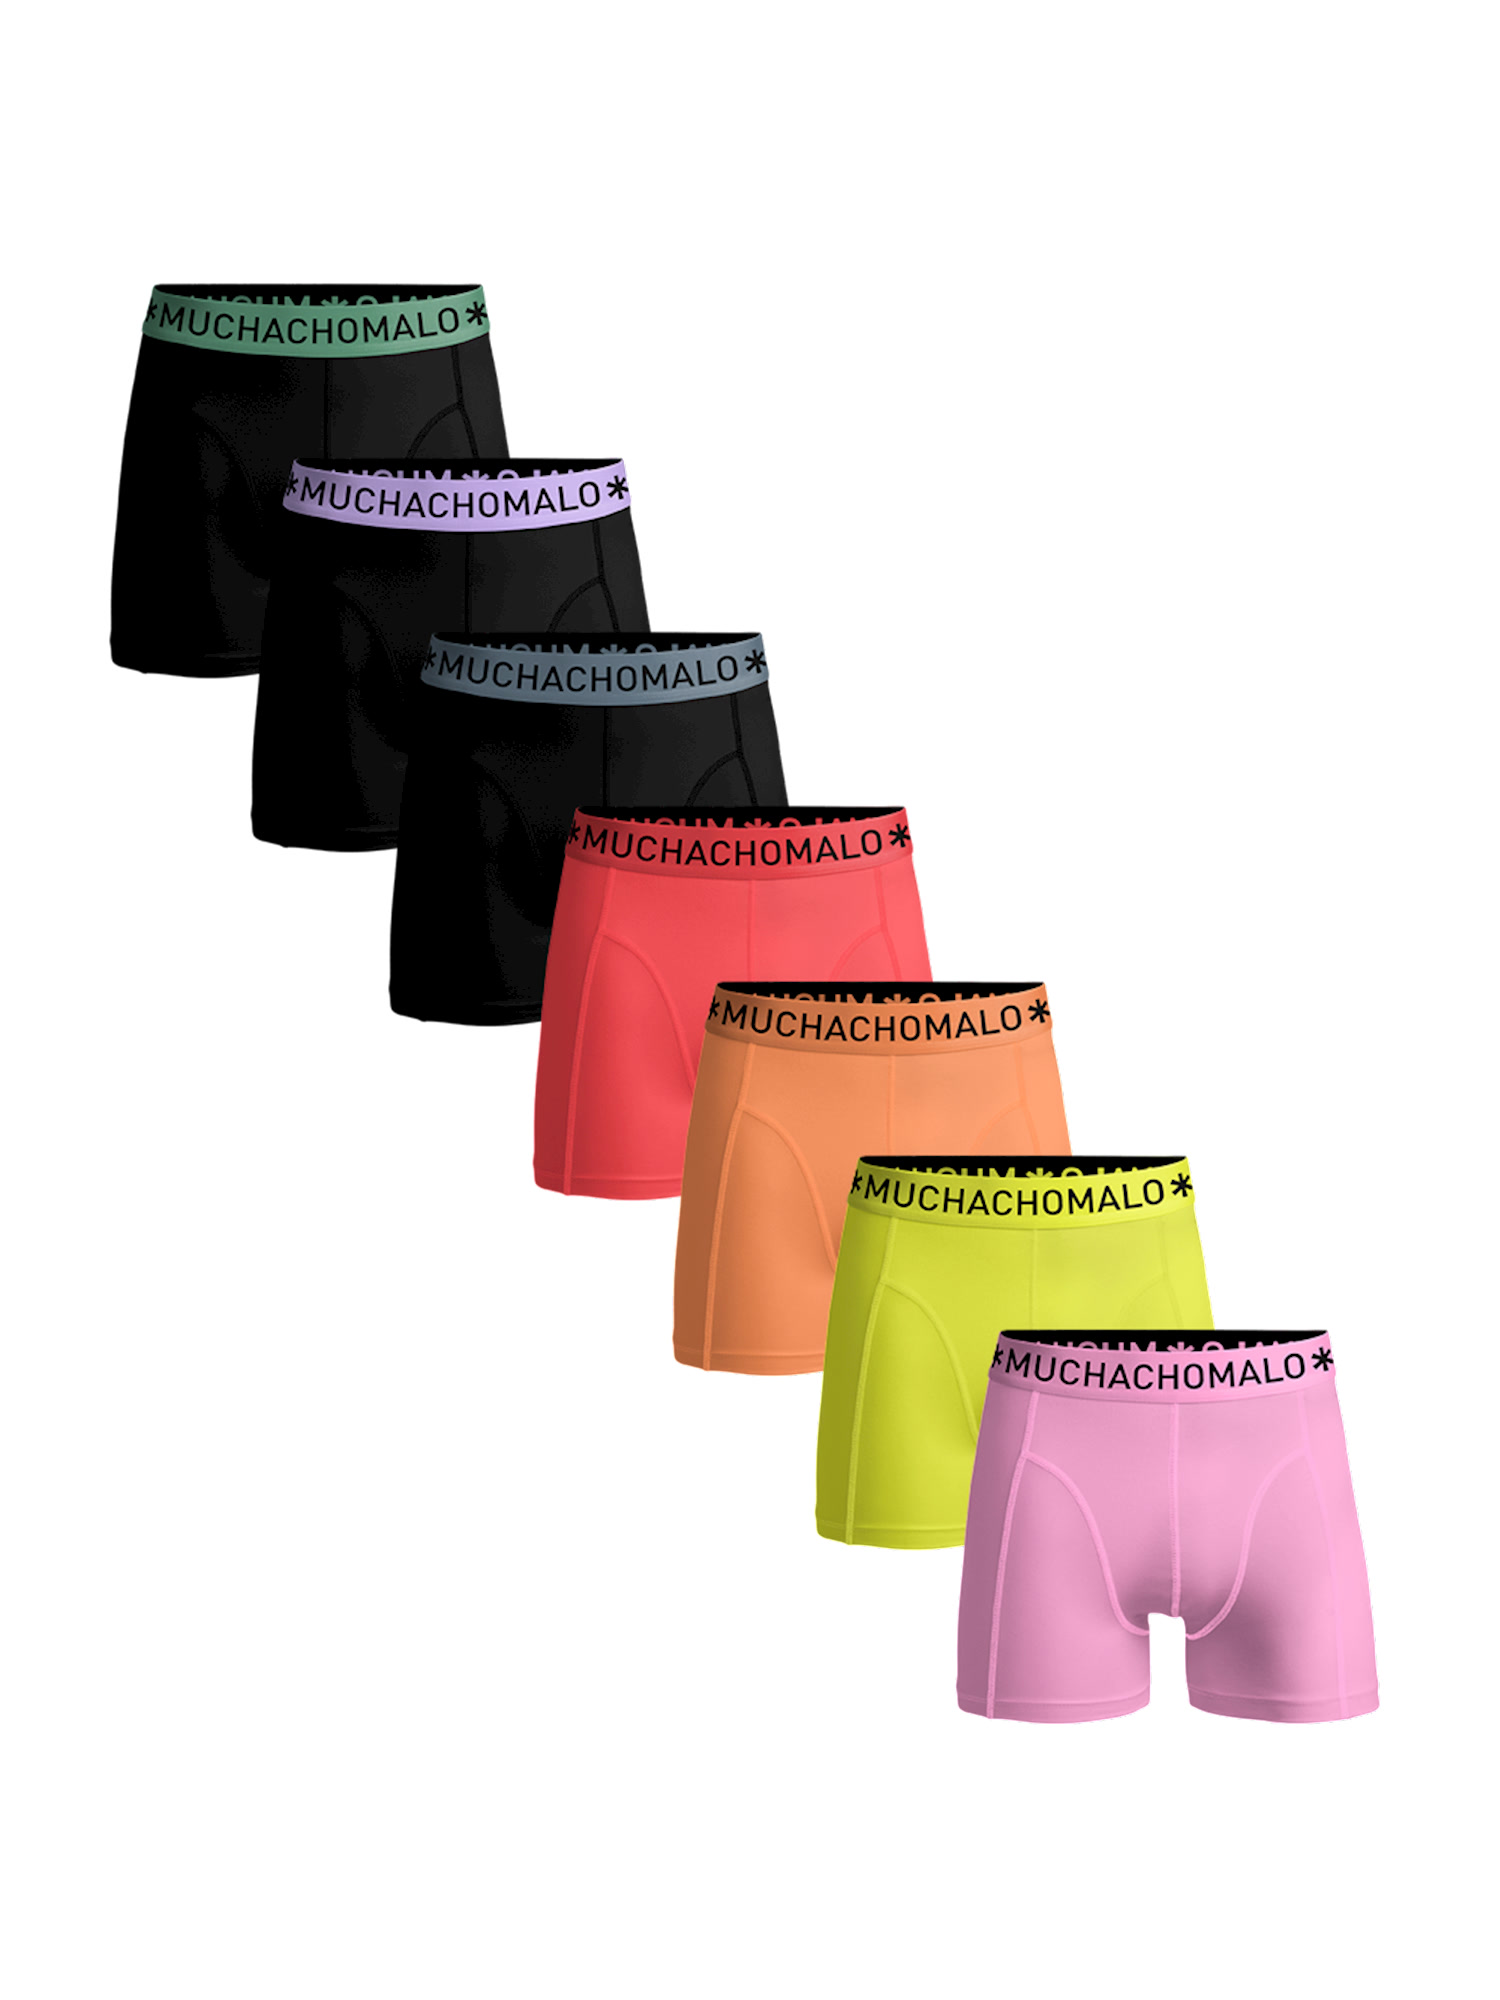 Боксеры Muchachomalo 7er-Set: Boxershorts, цвет Black/Black/Black/Pink/Orange/Yellow/Pink цена и фото